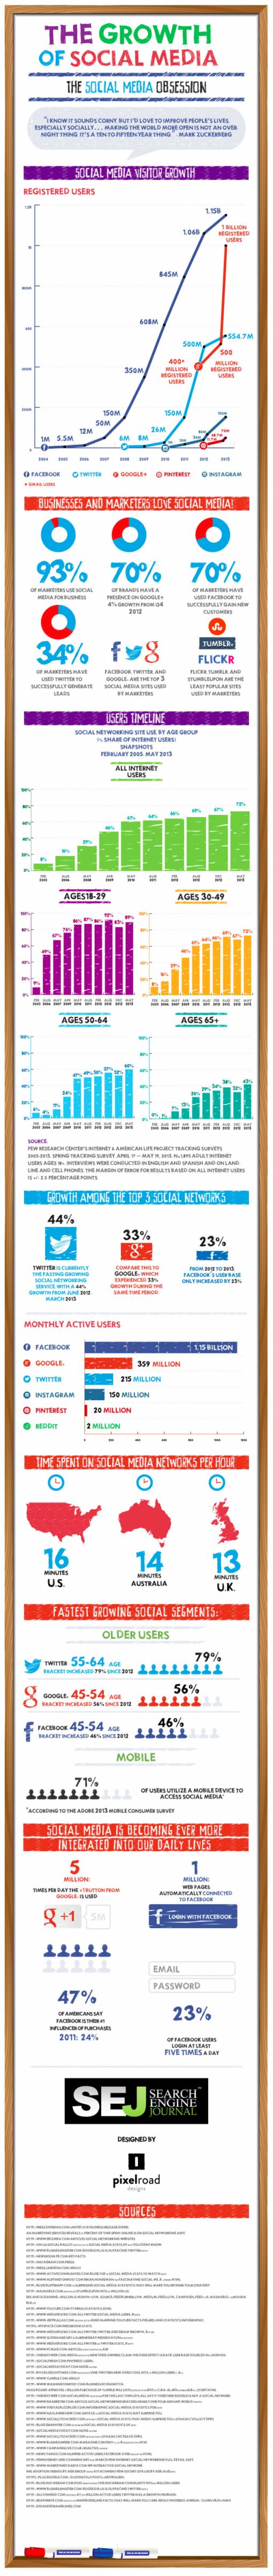 growth-of-social-media-infographic.jpg